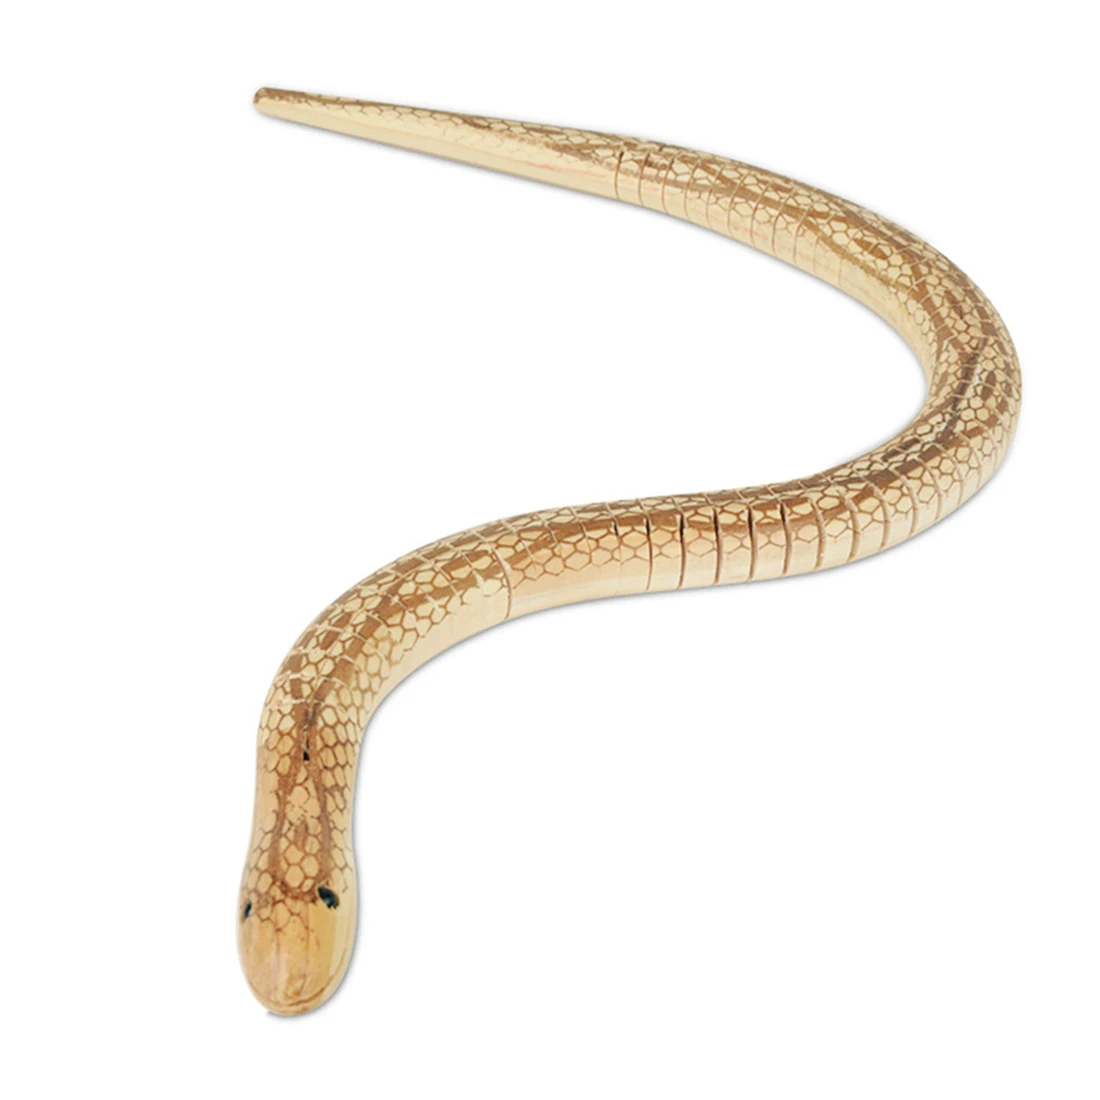 Novelty Trick Toys for Children Simulation Wooden Small Snakes Flexibility Fake Bendy Snake Toy Adorn - Random Color